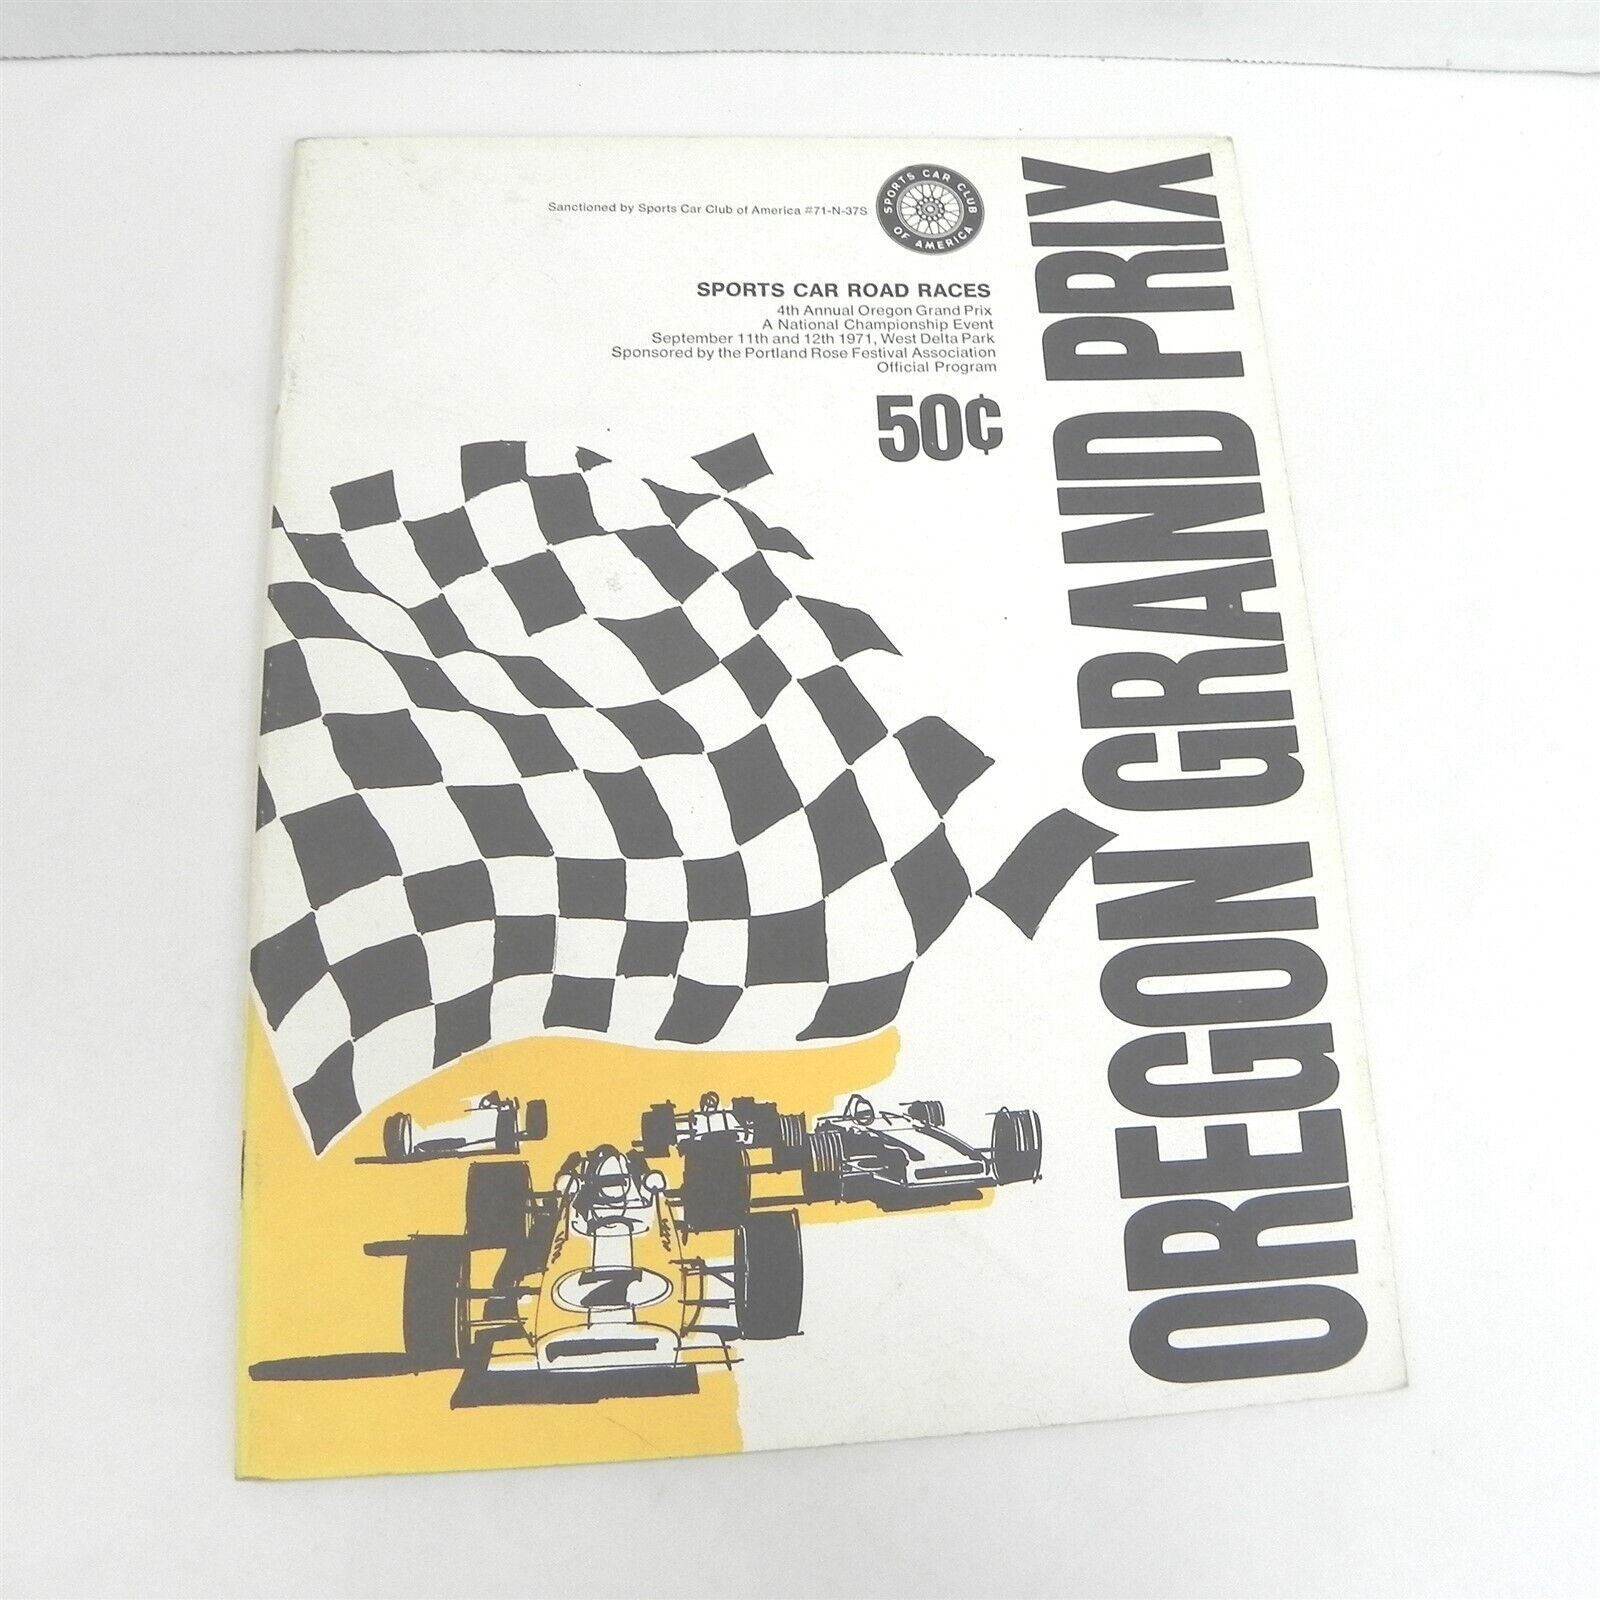 VTG 1971 OREGON GRAND PRIX SPROTS CAR CLUB OF AMERICA 4TH ANNUAL RACE PROGRAM